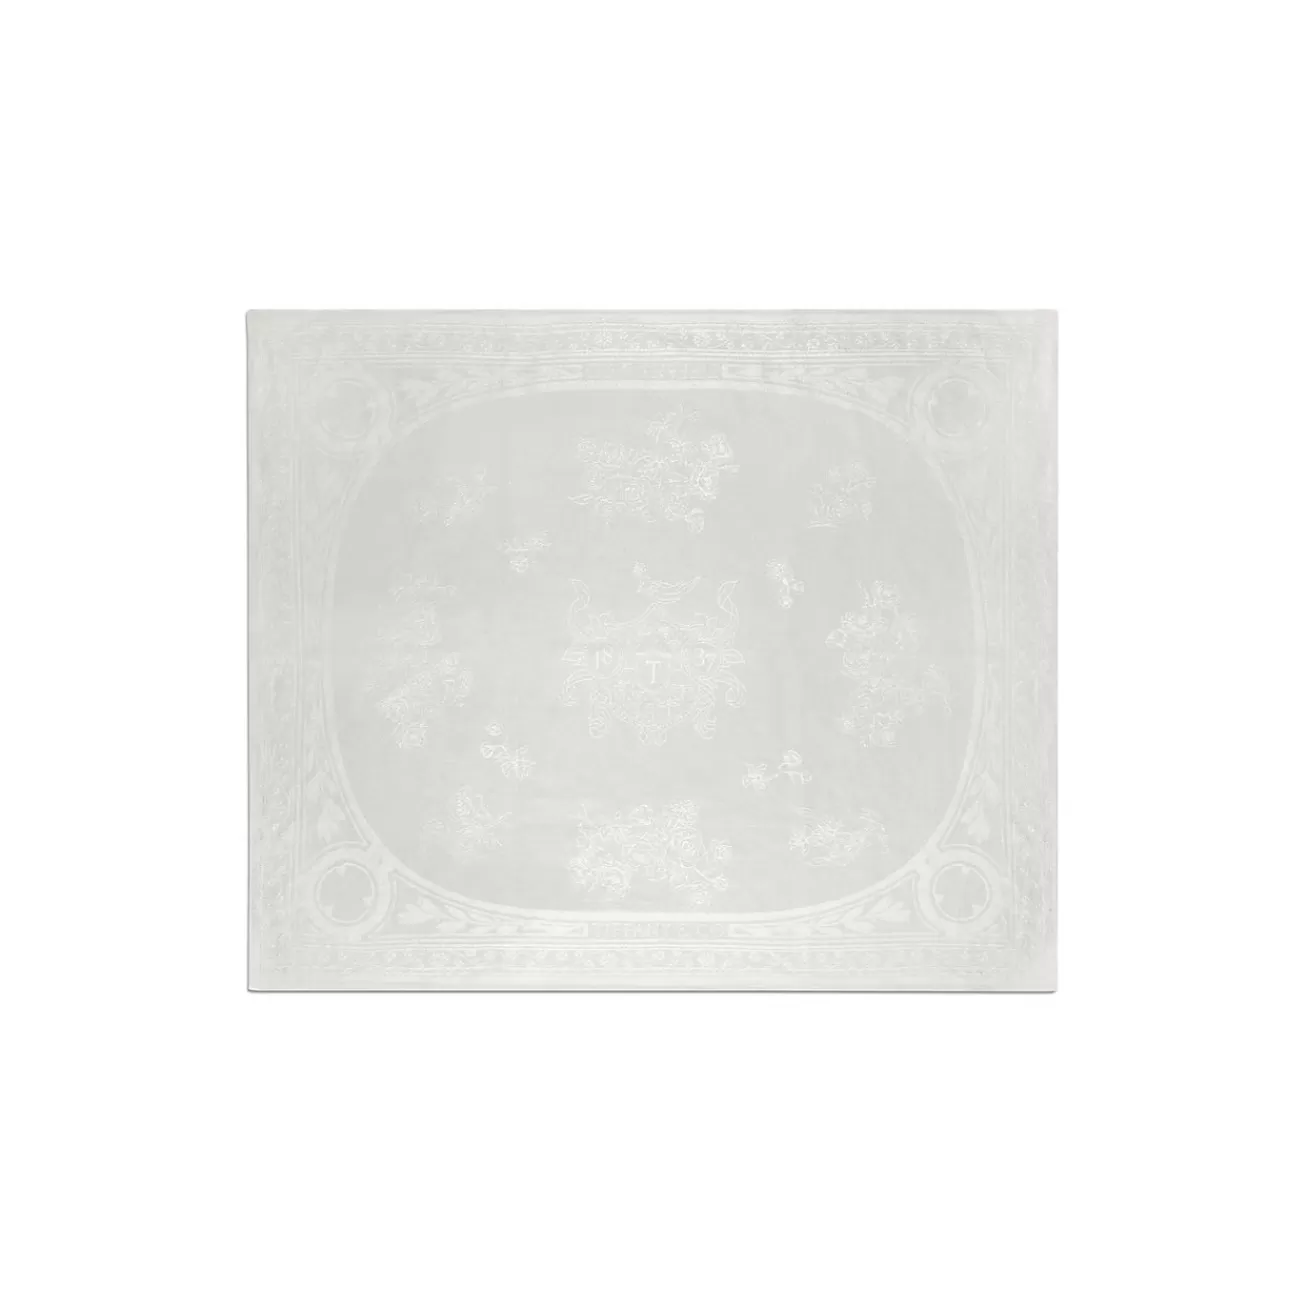 Tiffany & Co. Tiffany Crest Napkin in Embroidered White Linen | ^ Decor | Table Linens